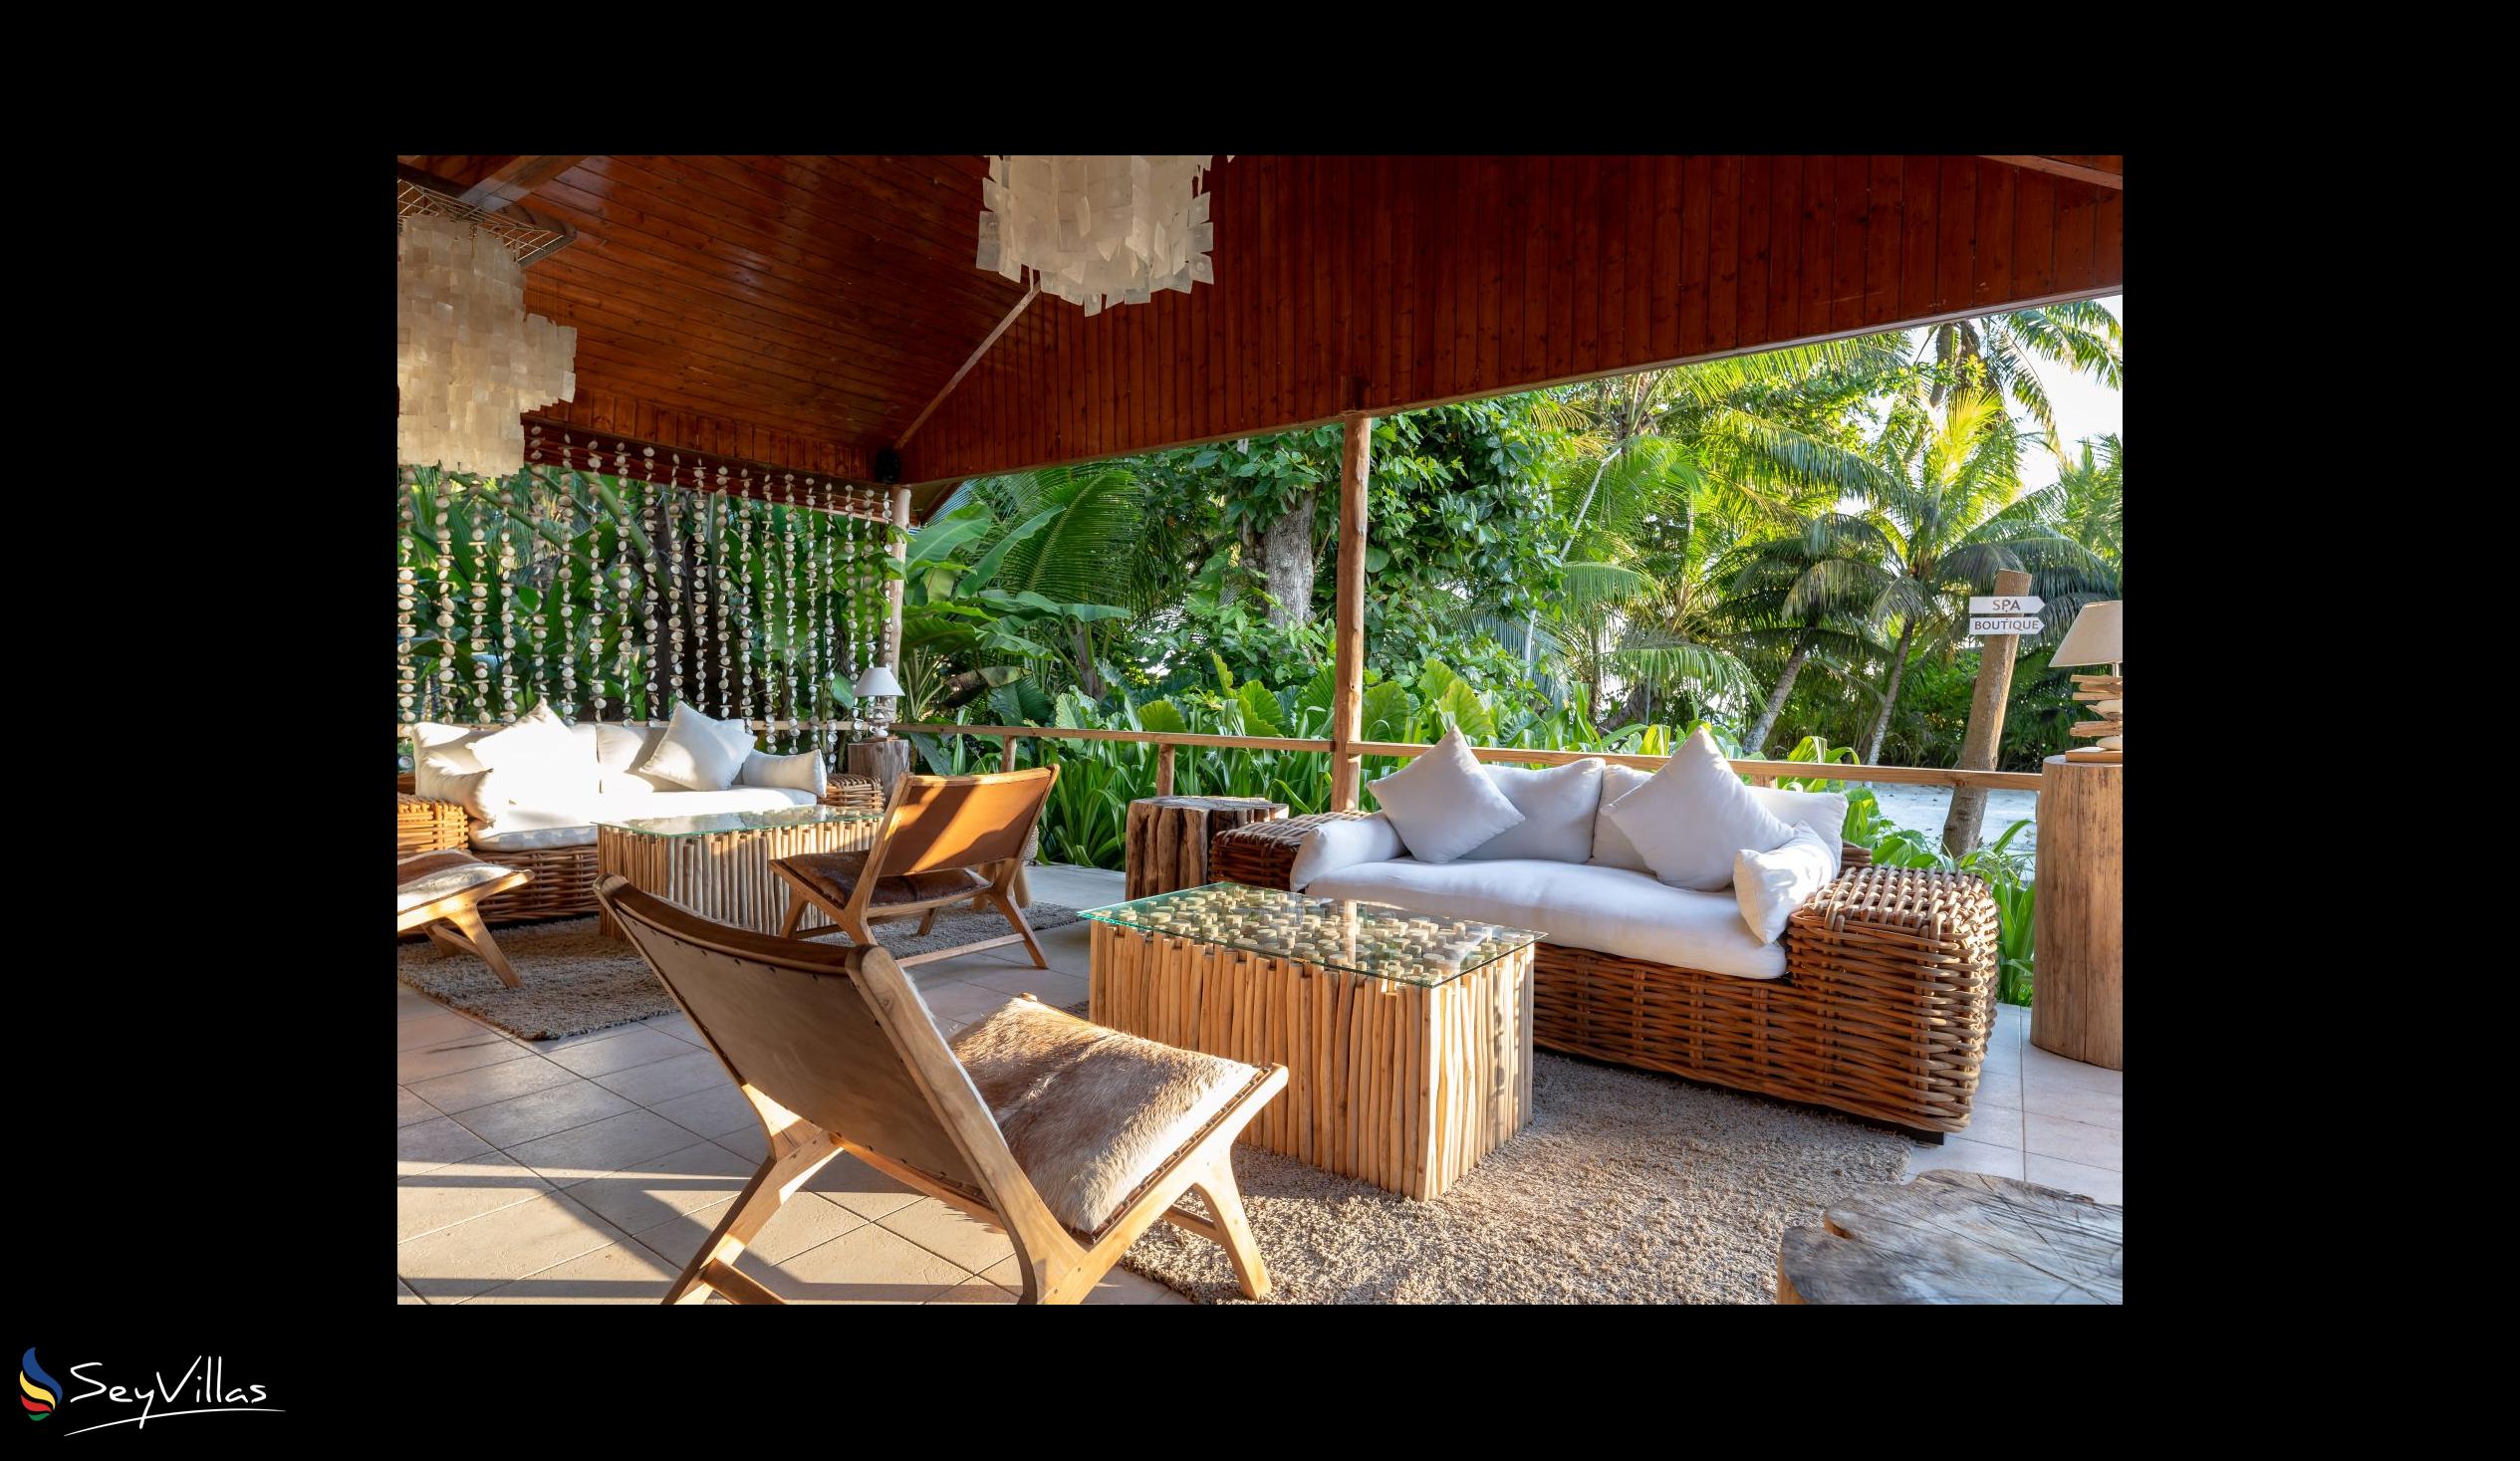 Photo 10: Bliss Hotel Praslin - Outdoor area - Praslin (Seychelles)